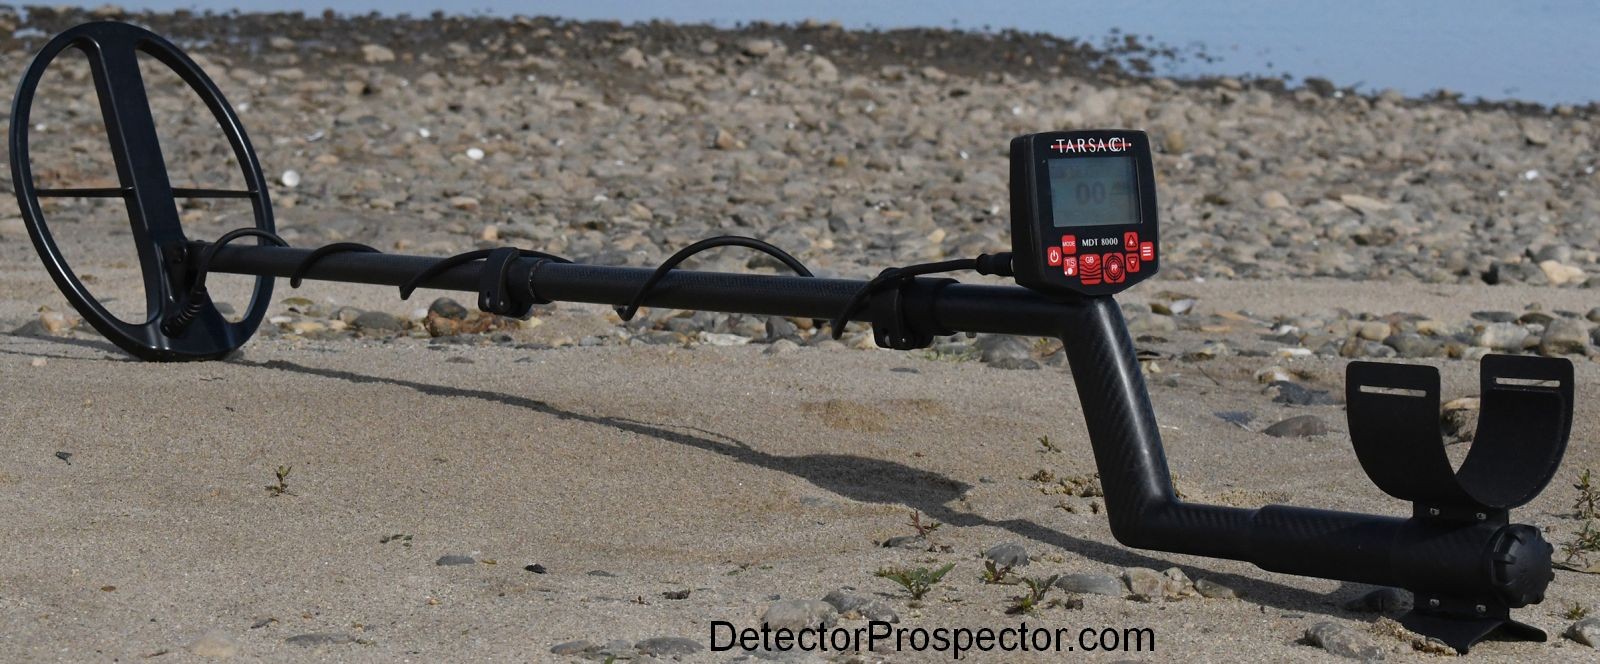 tarsacci-mdt-8000-beach-metal-detector.jpg